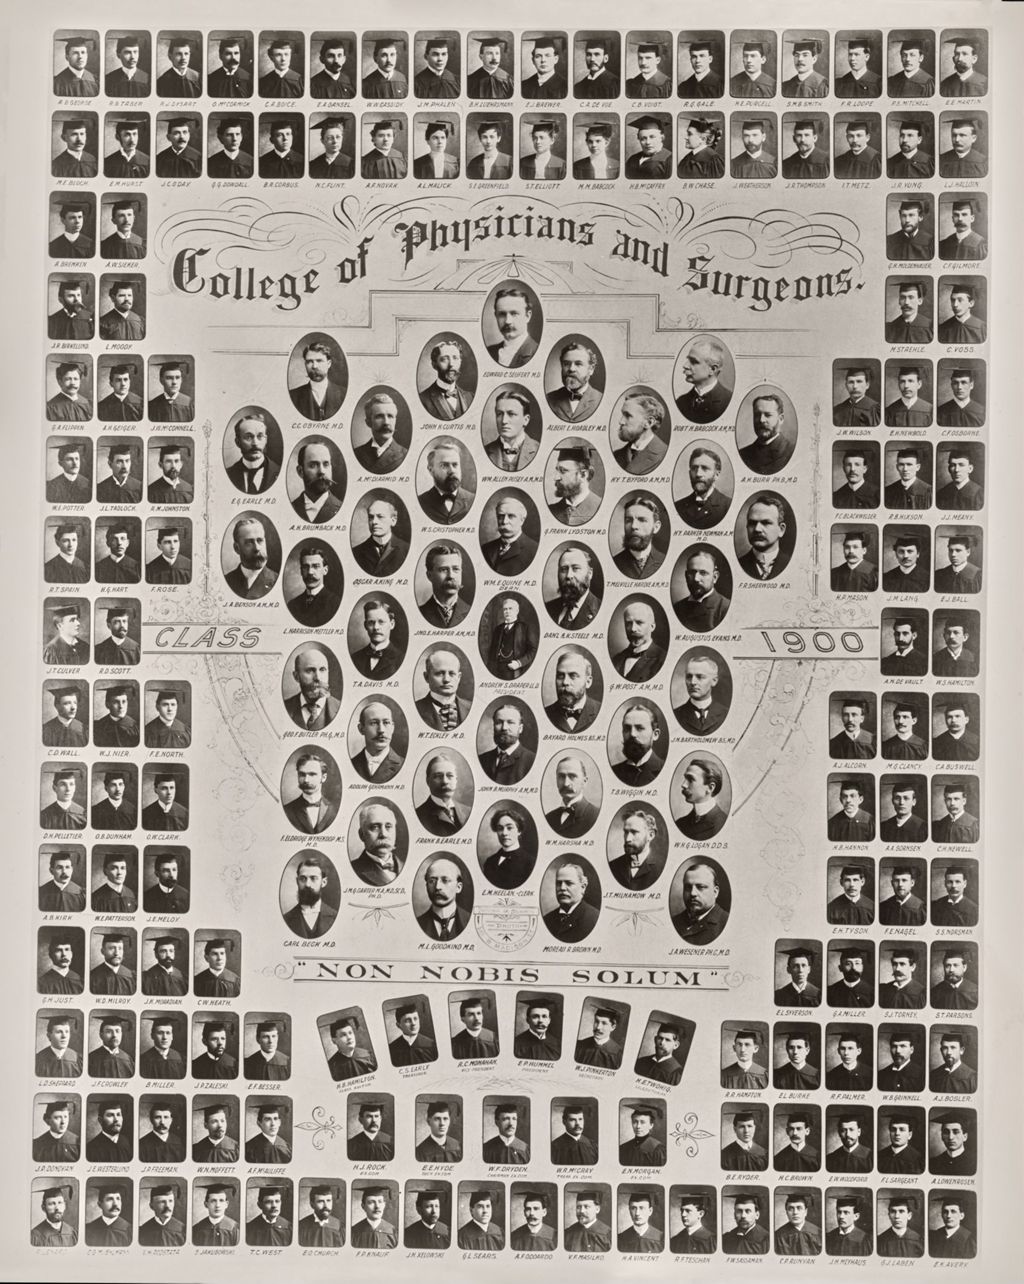 Miniature of 1900 graduating class, University of Illinois College of Medicine